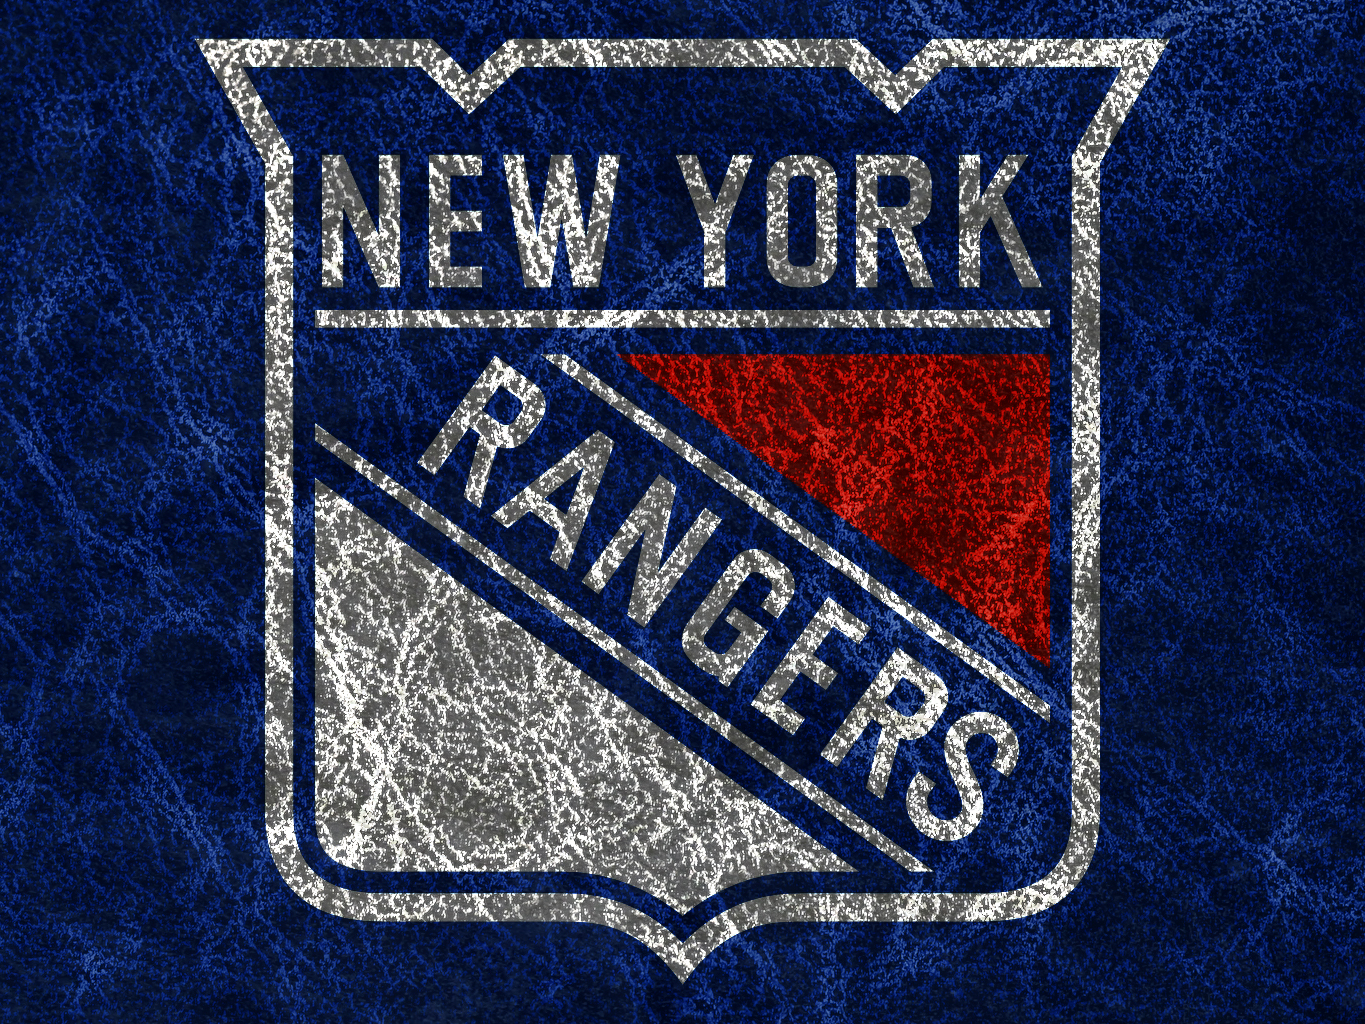 New York Rangers Wallpaper HD Full Pictures